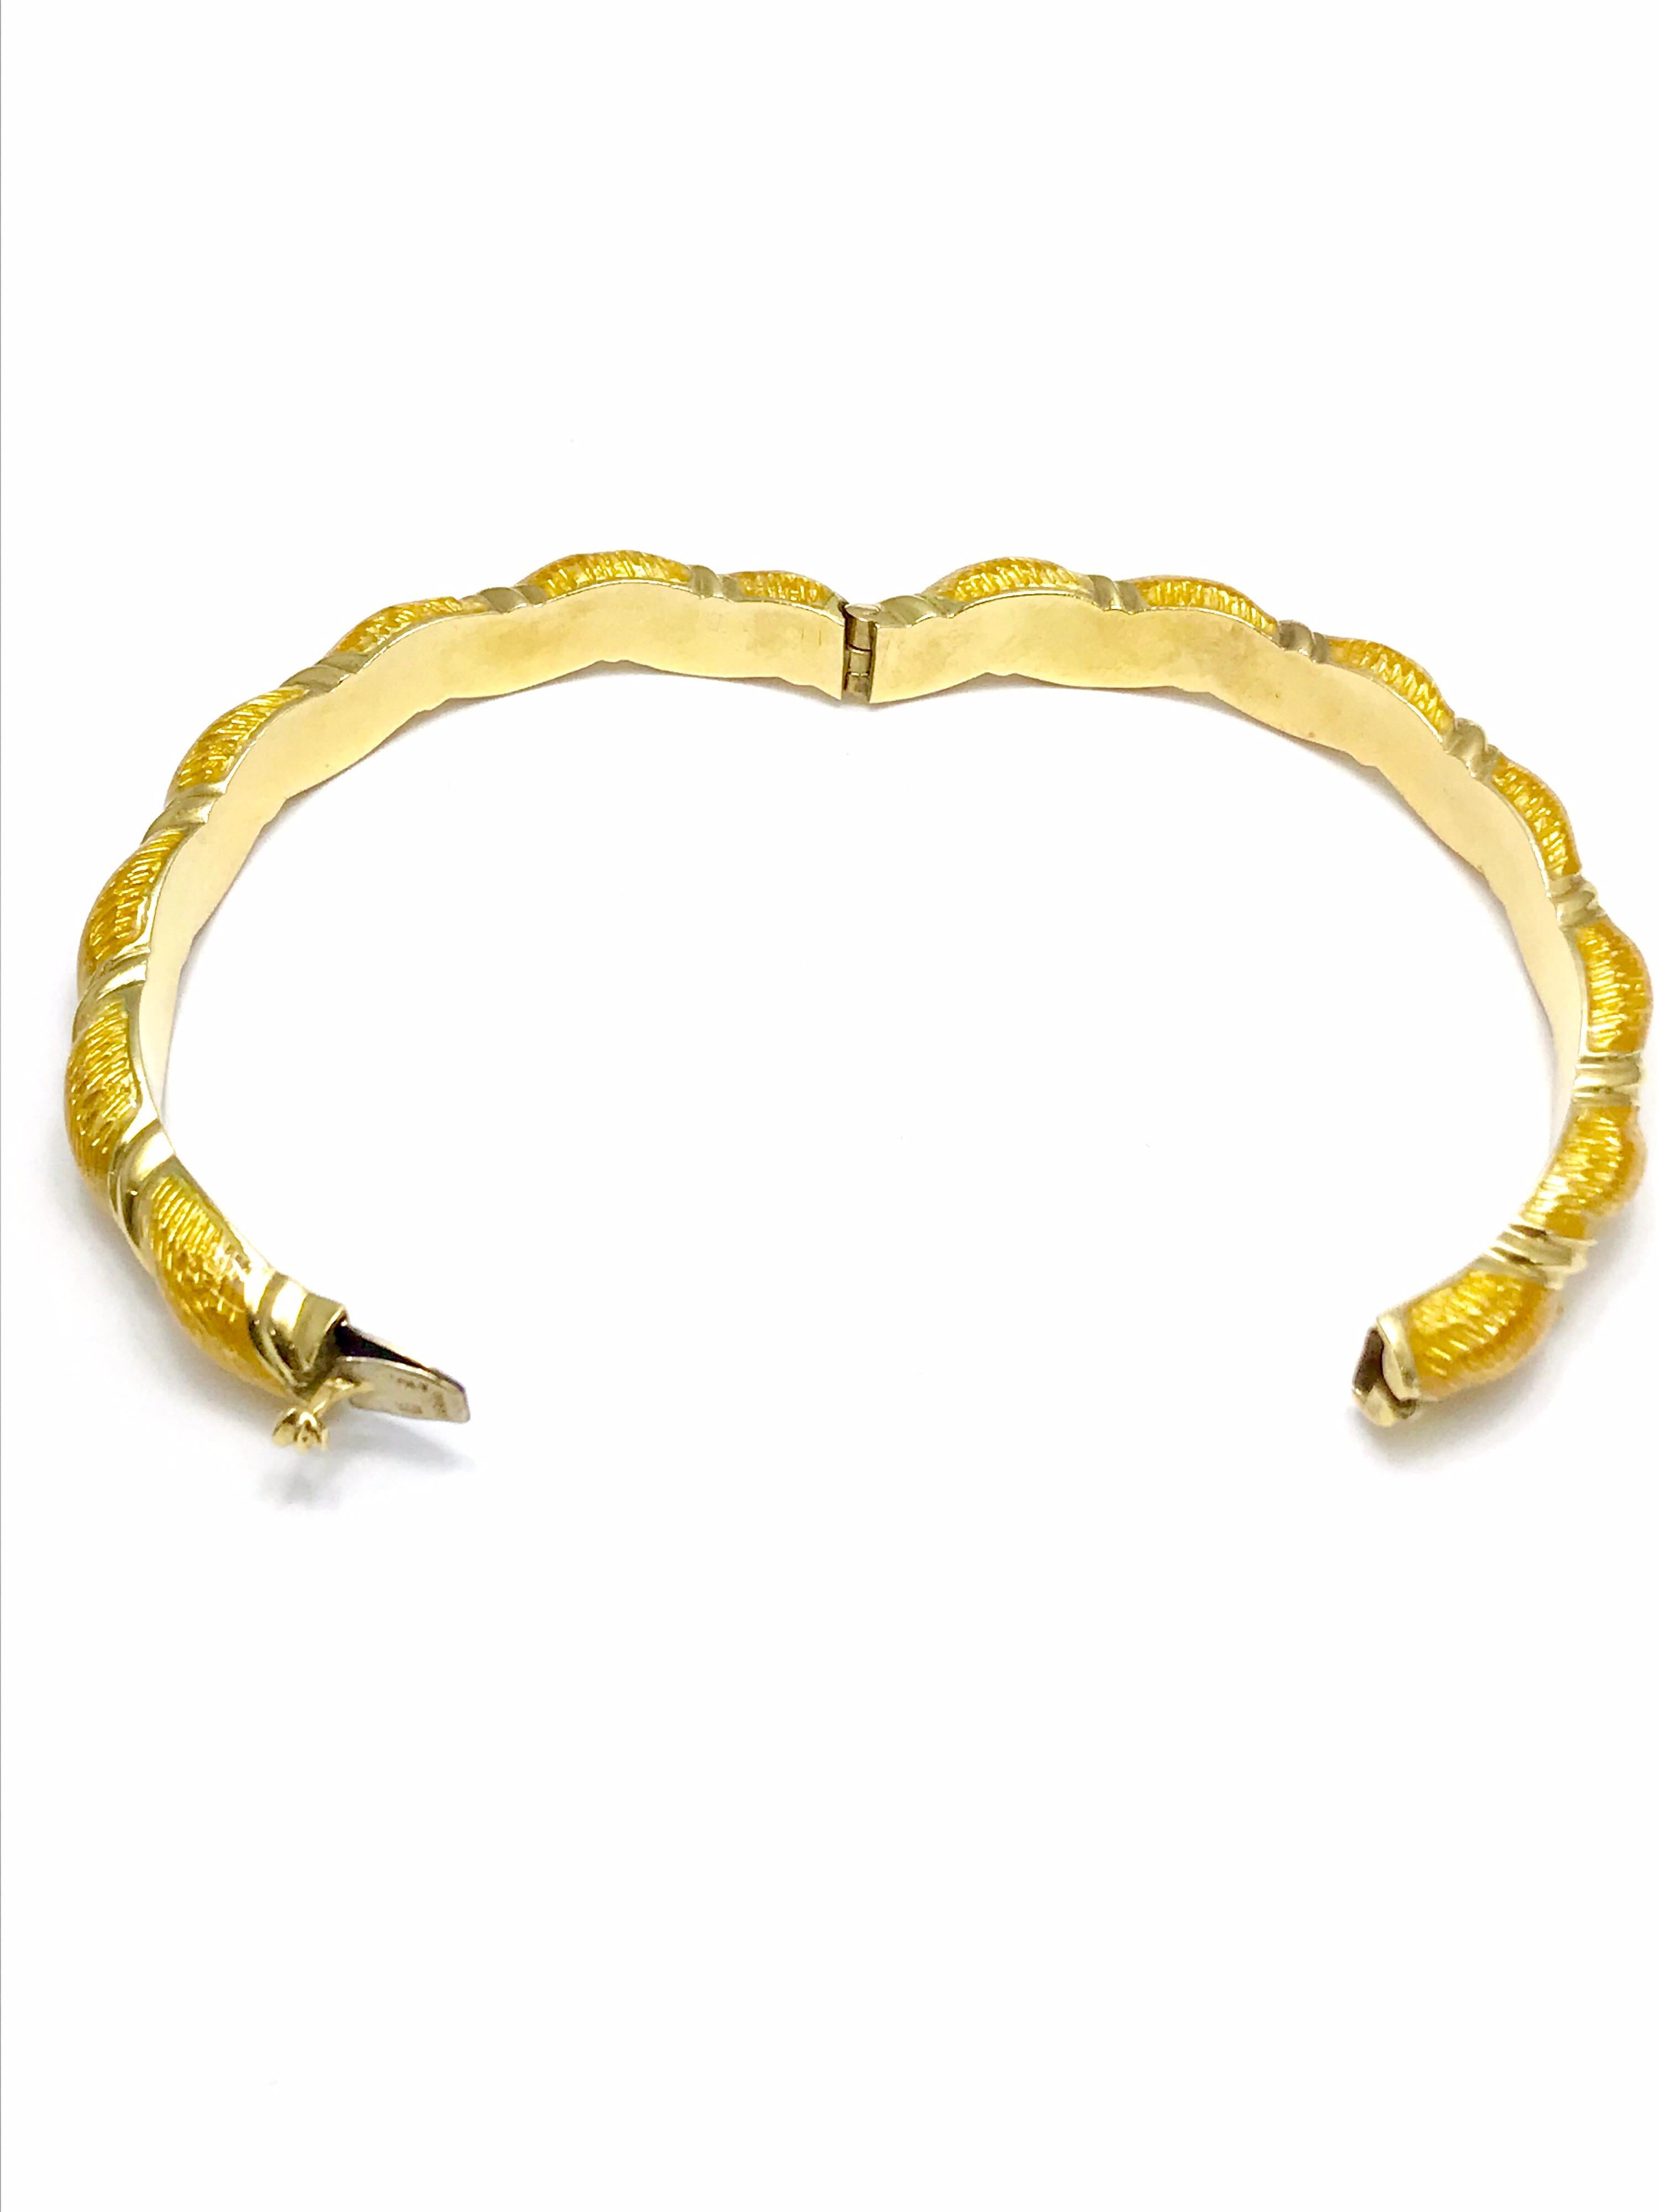 Women's or Men's Honey Yellow Guilloche Enamel and 18 Karat Yellow Gold Bangle Bracelet